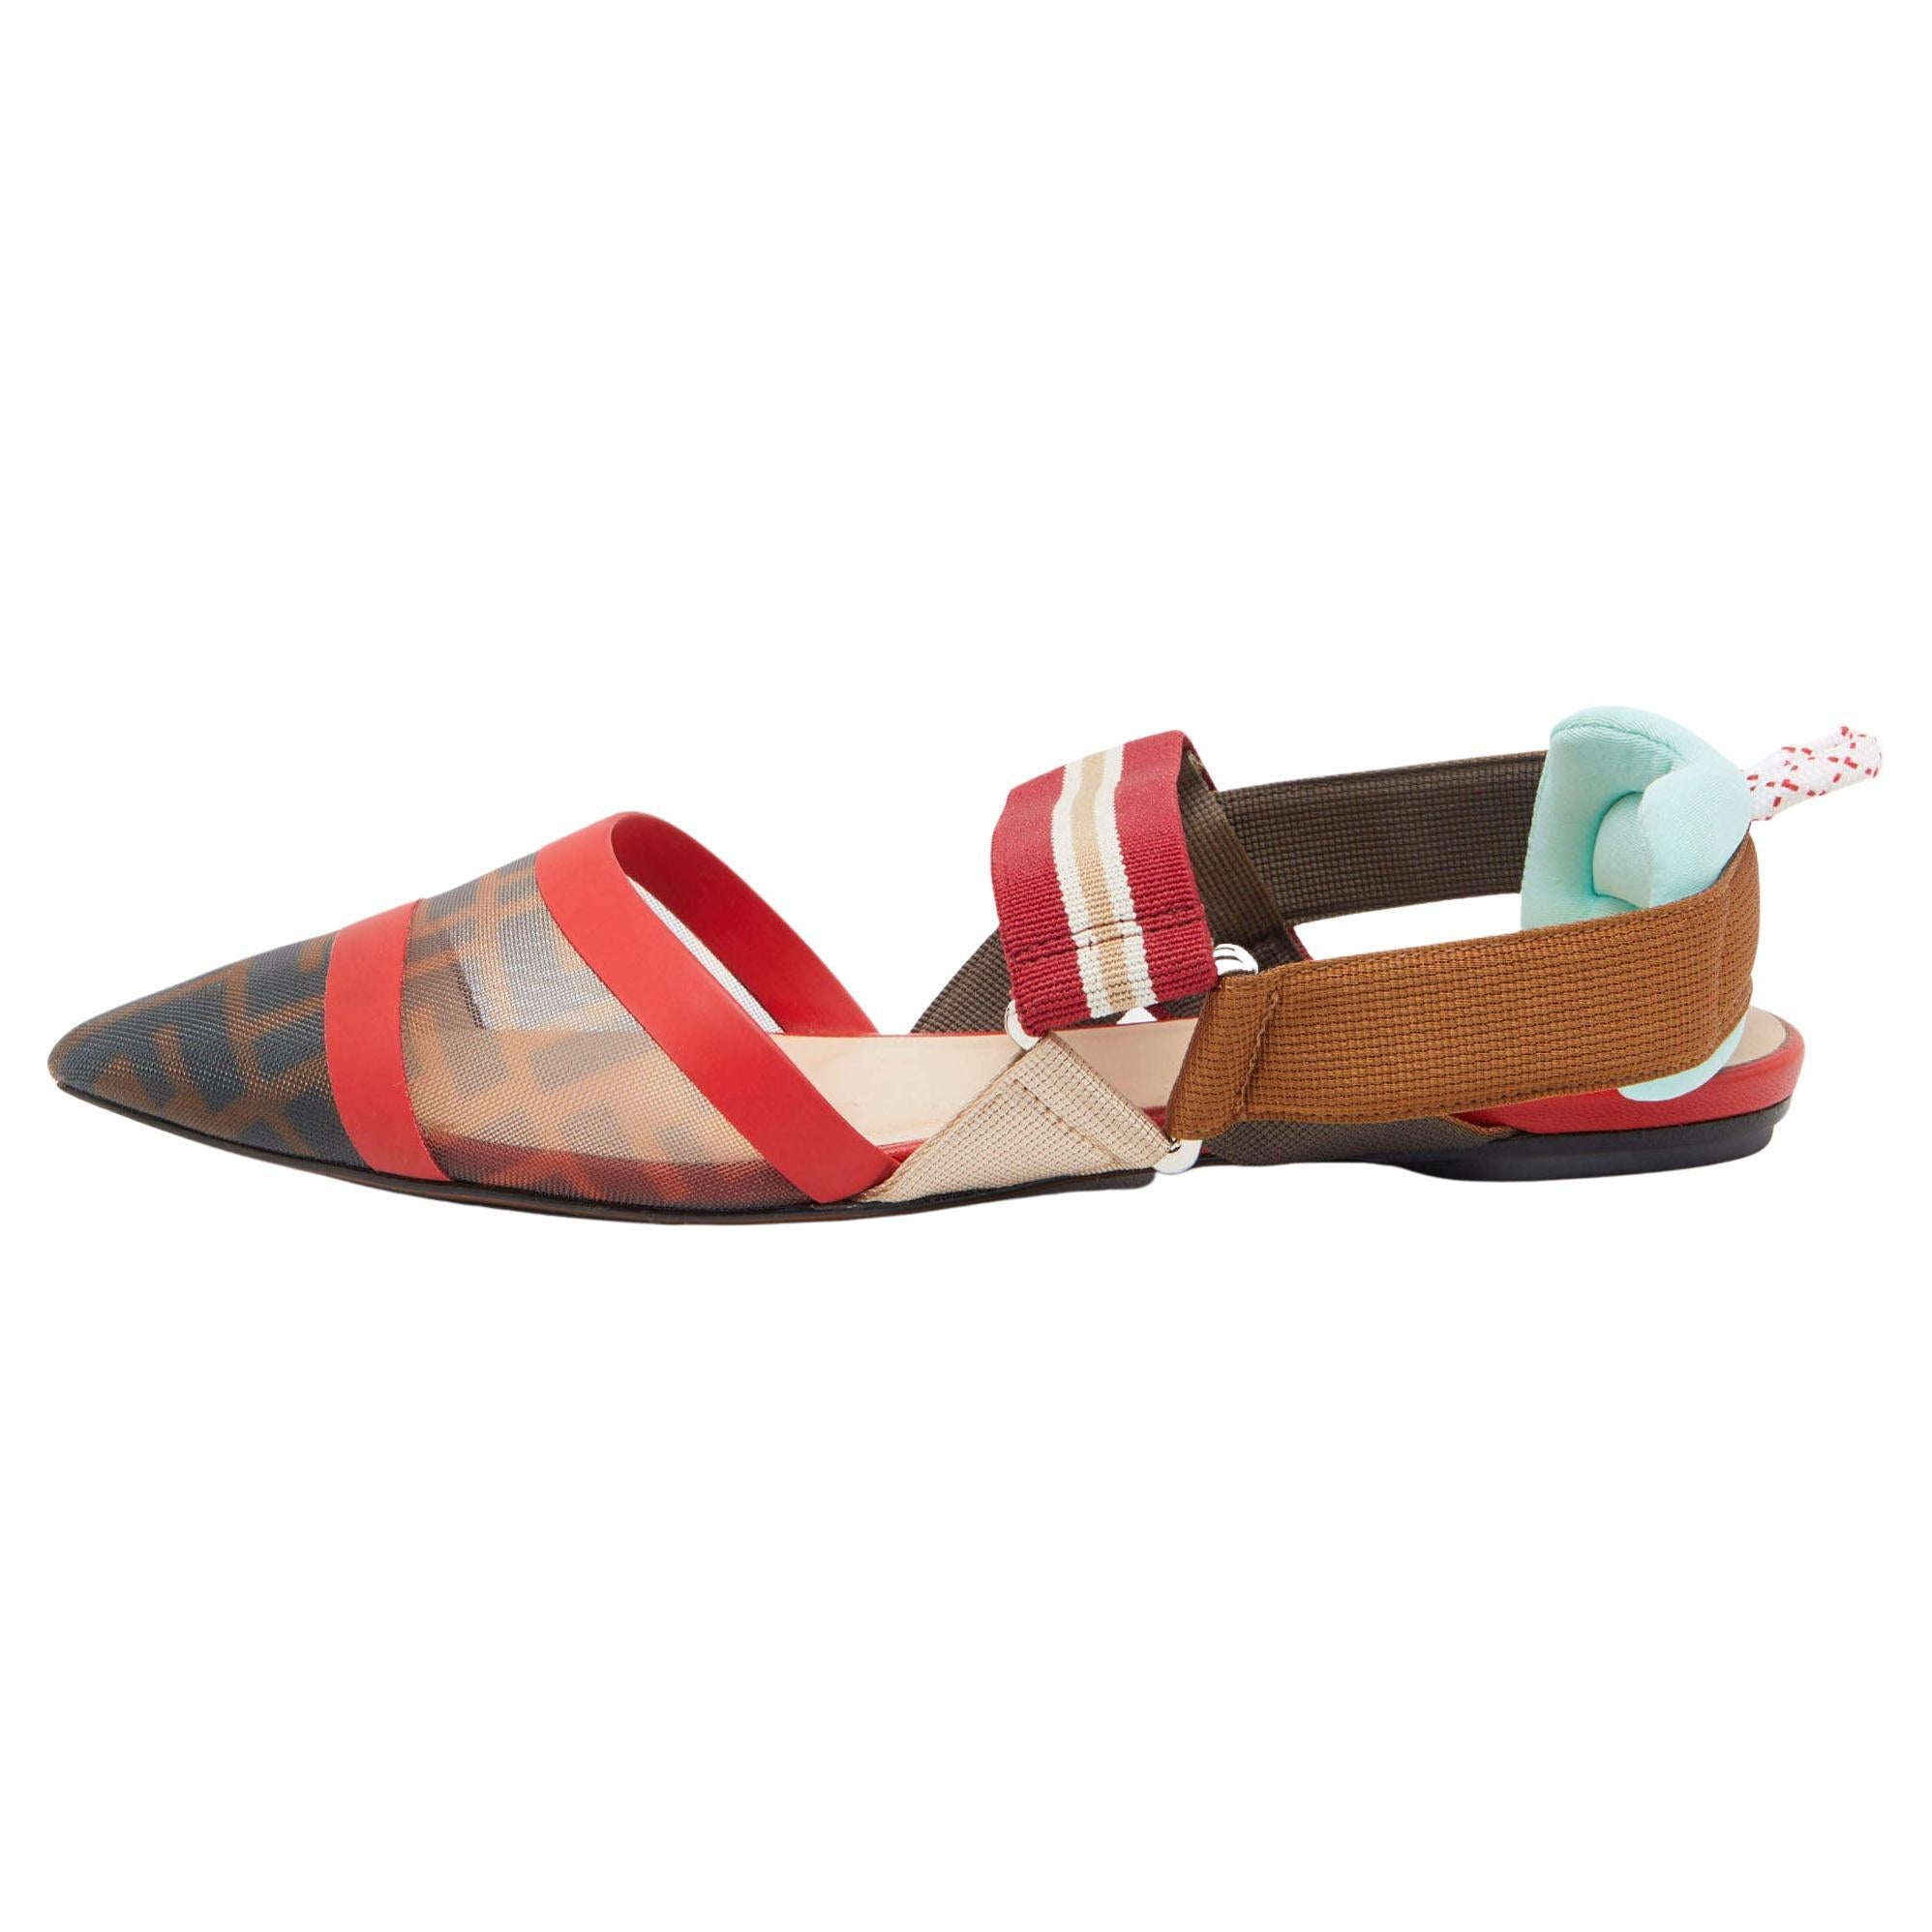 Fendi Multicolor Leather and Mesh Colibri Slingback Sandals Size 37